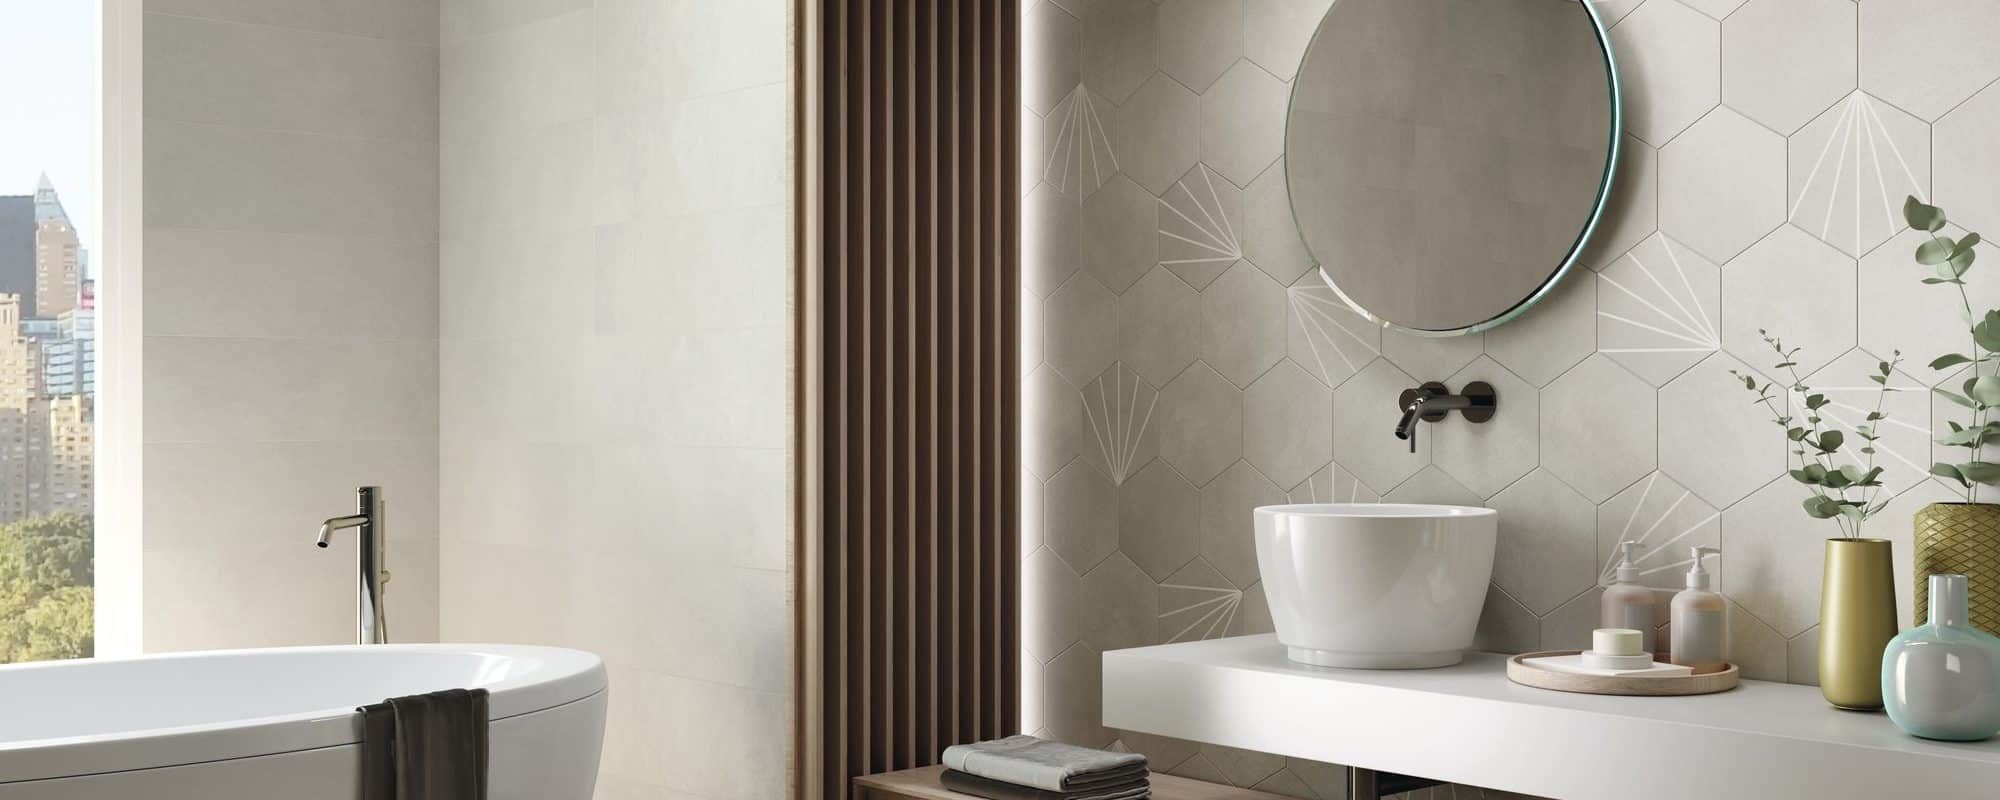 KLEN cement effect porcelain bathroom tiles uk slider 6